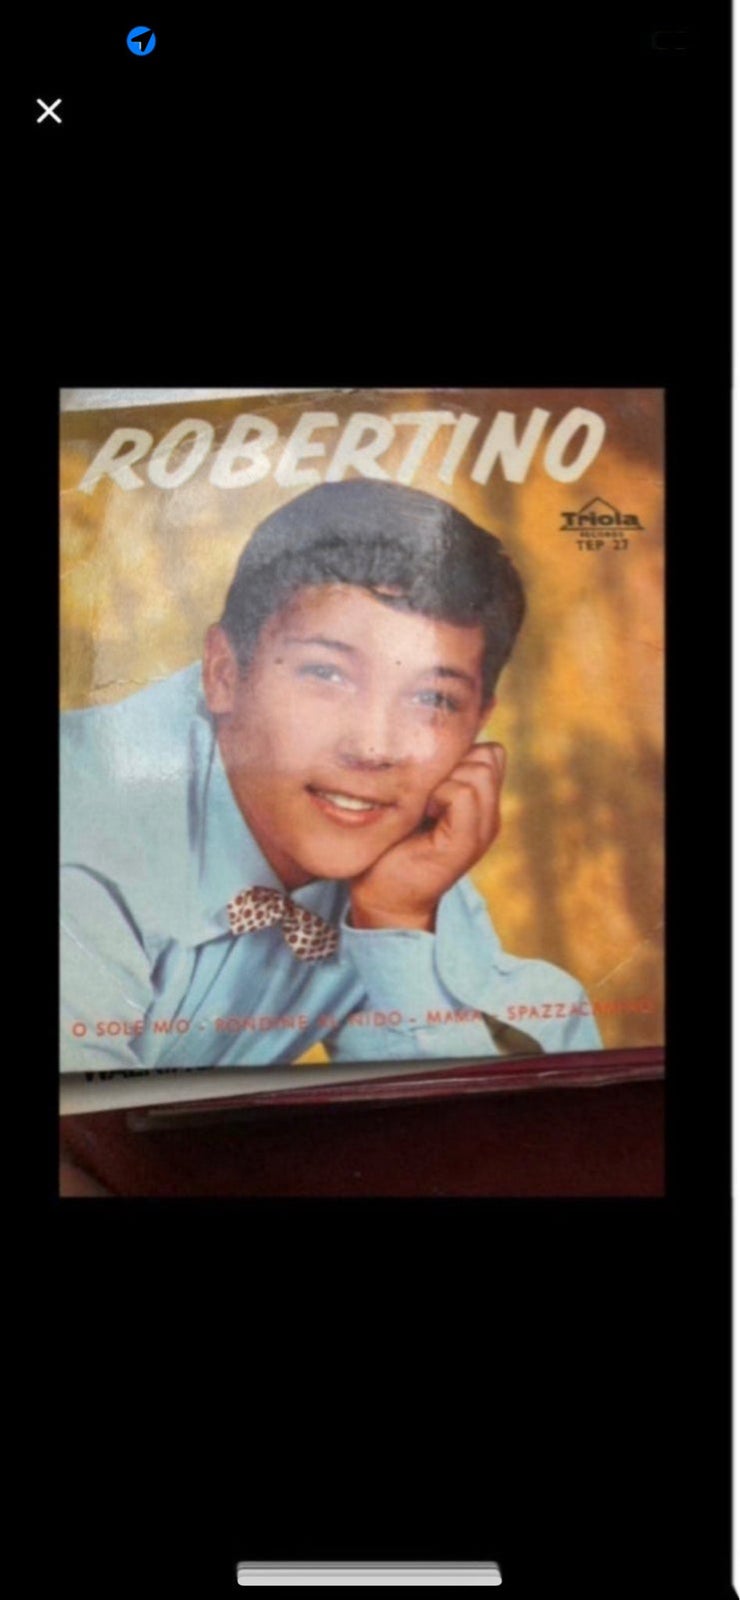 Single, Robertino, O Sole Mio